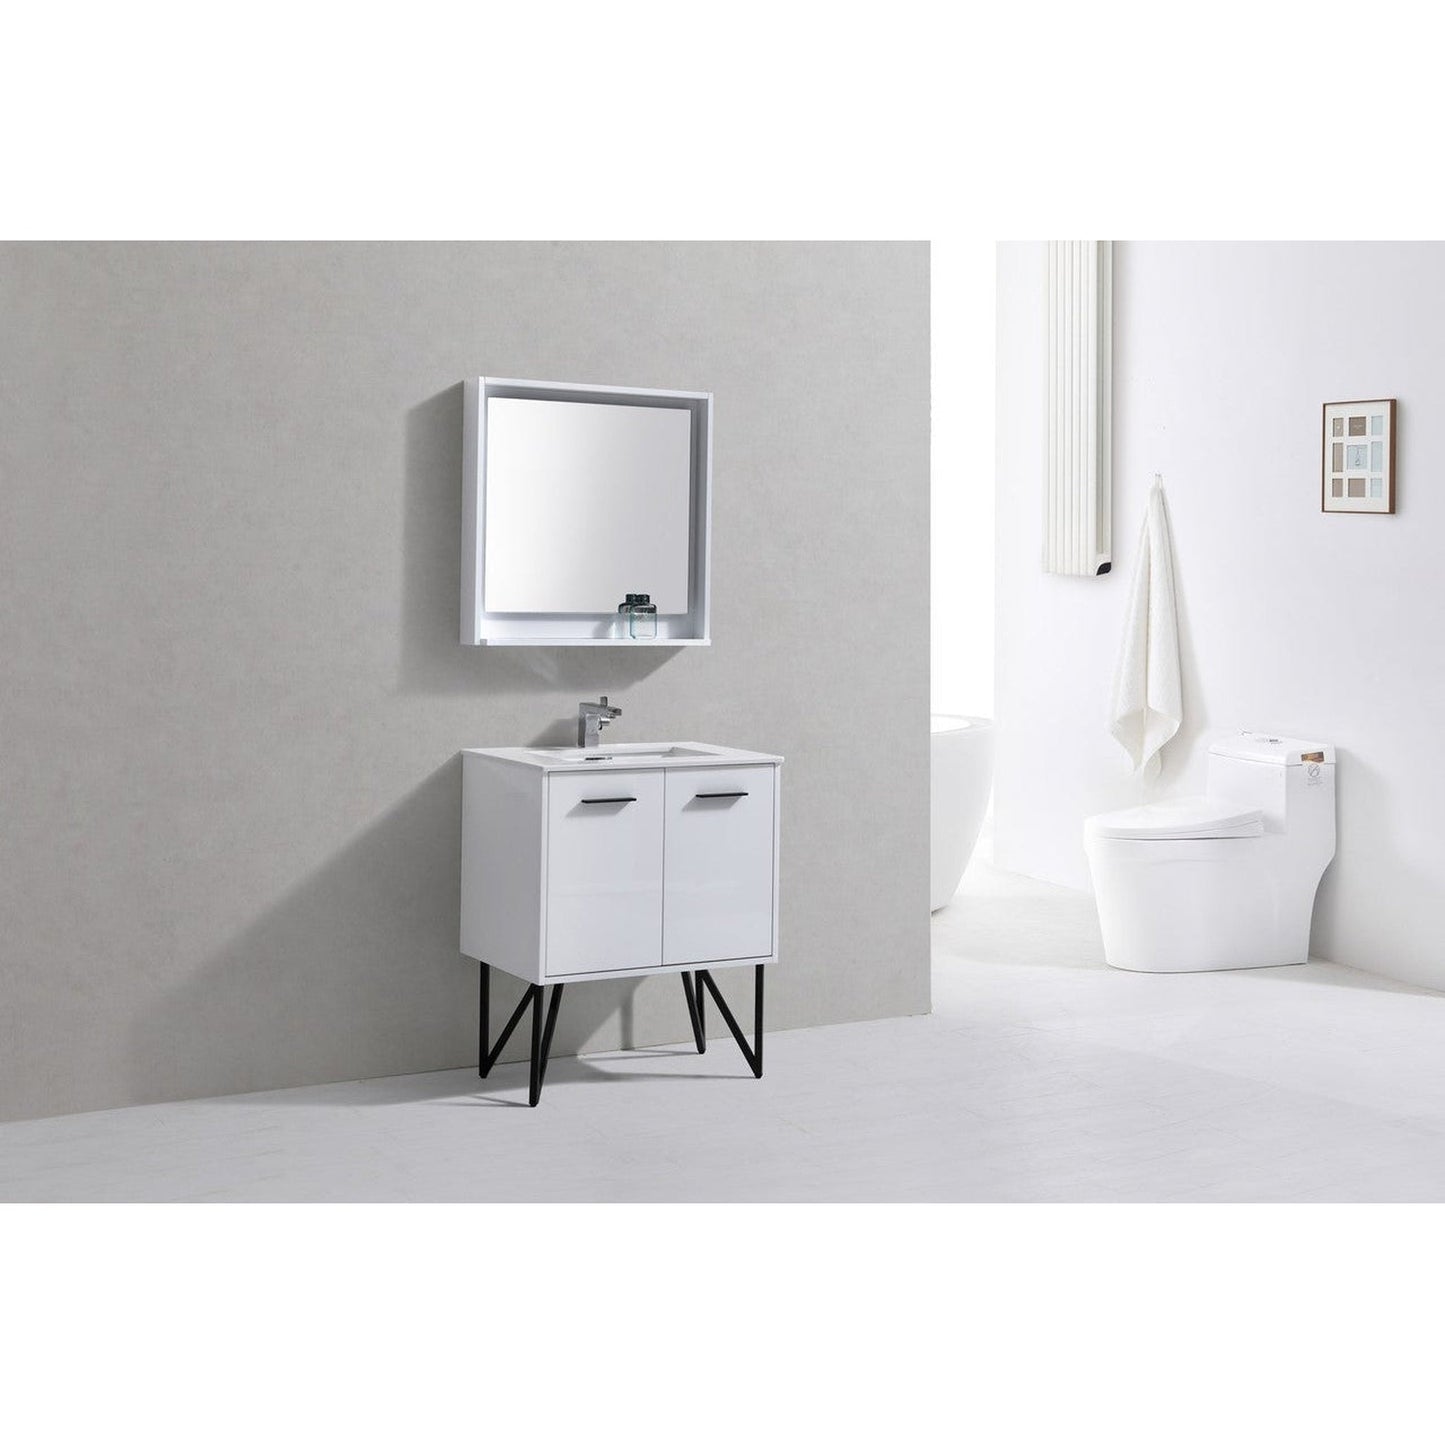 KubeBath Bosco 30" High Gloss White Modern Freestanding Bathroom Vanity With Single Undermount Sink With Overflow and 30" White Framed Mirror